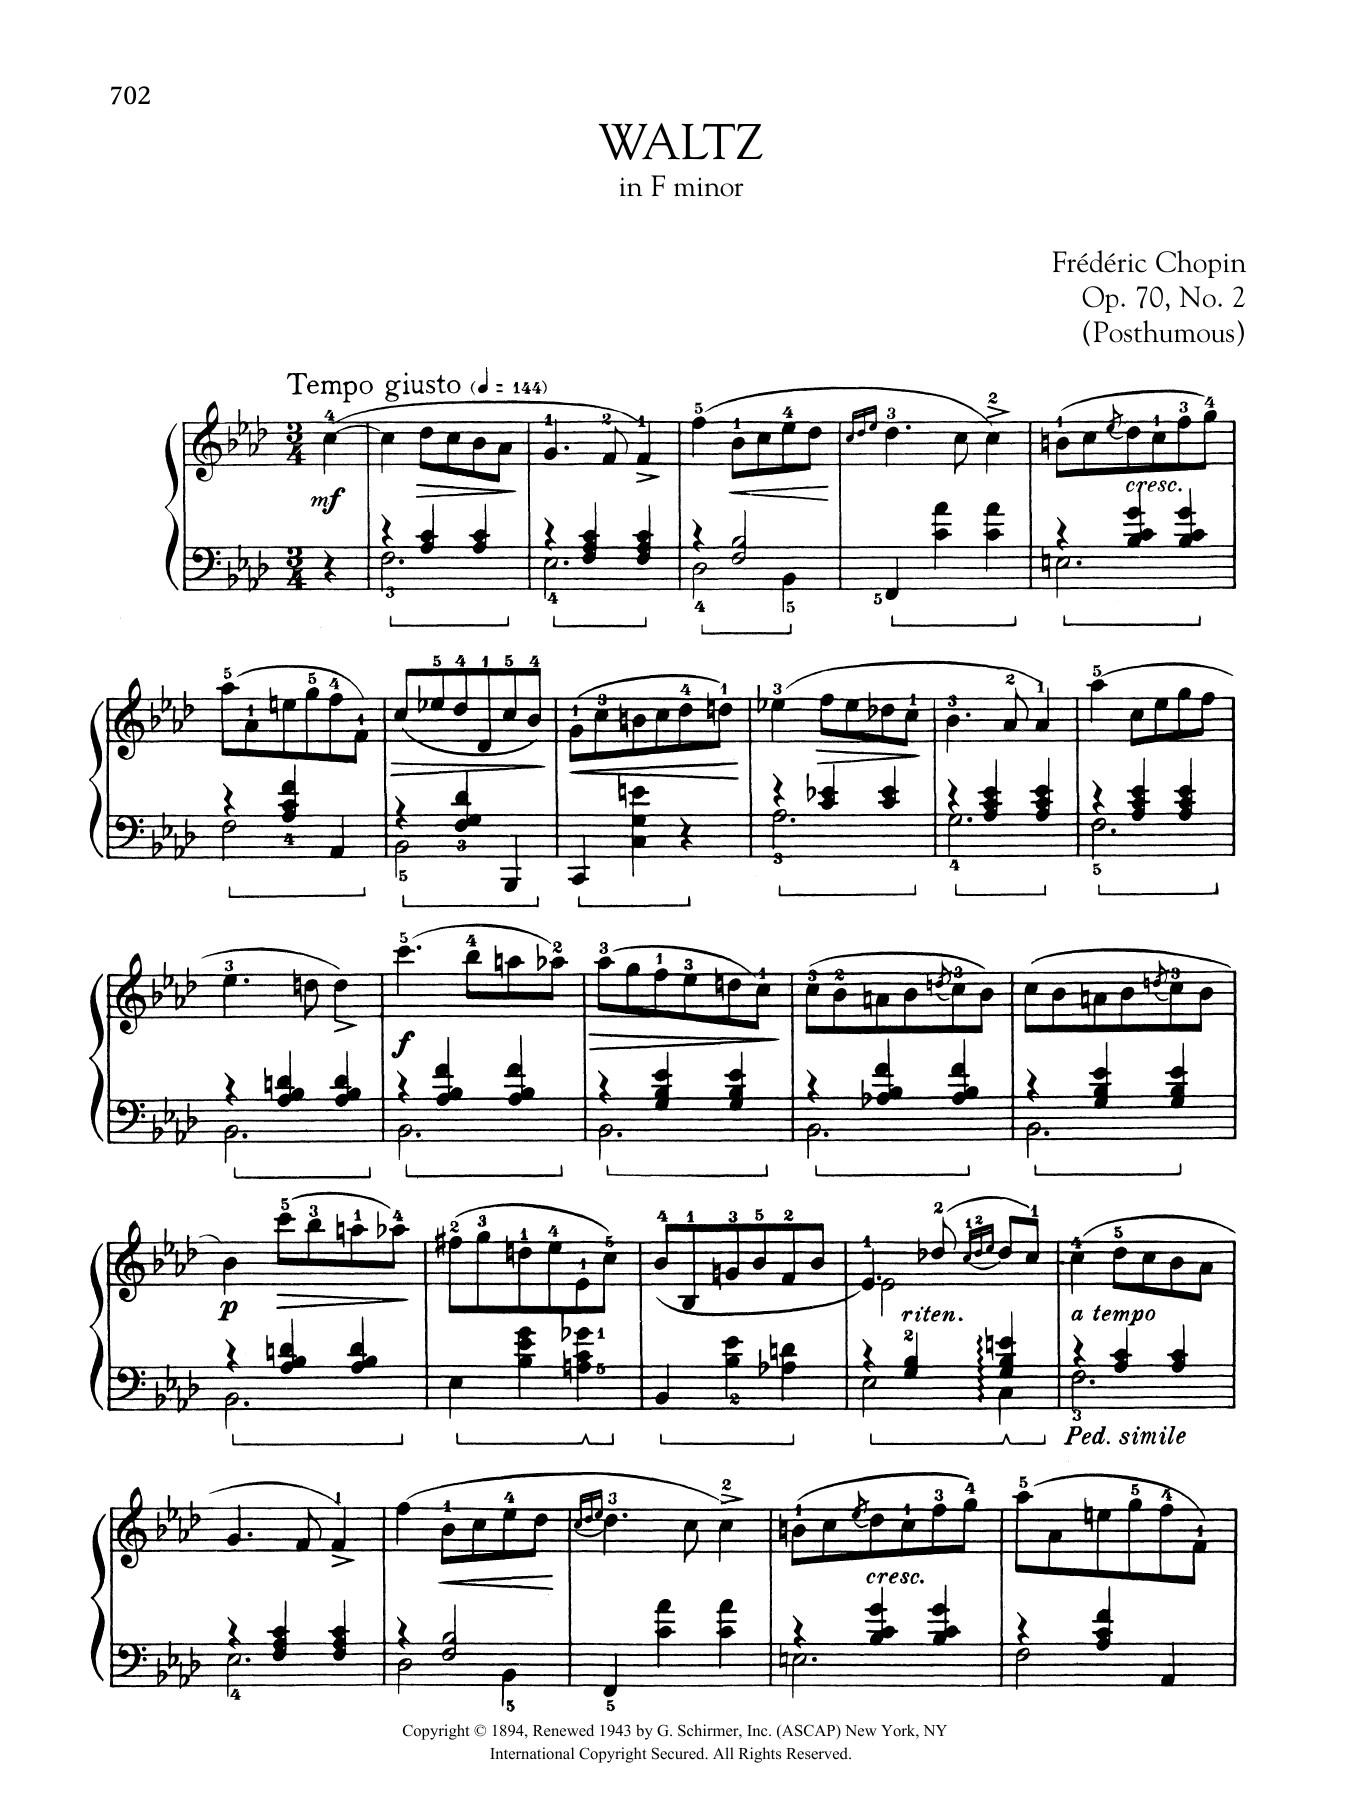 Waltz in F minor, Op. 70, No. 2 (Posthumous) sheet music